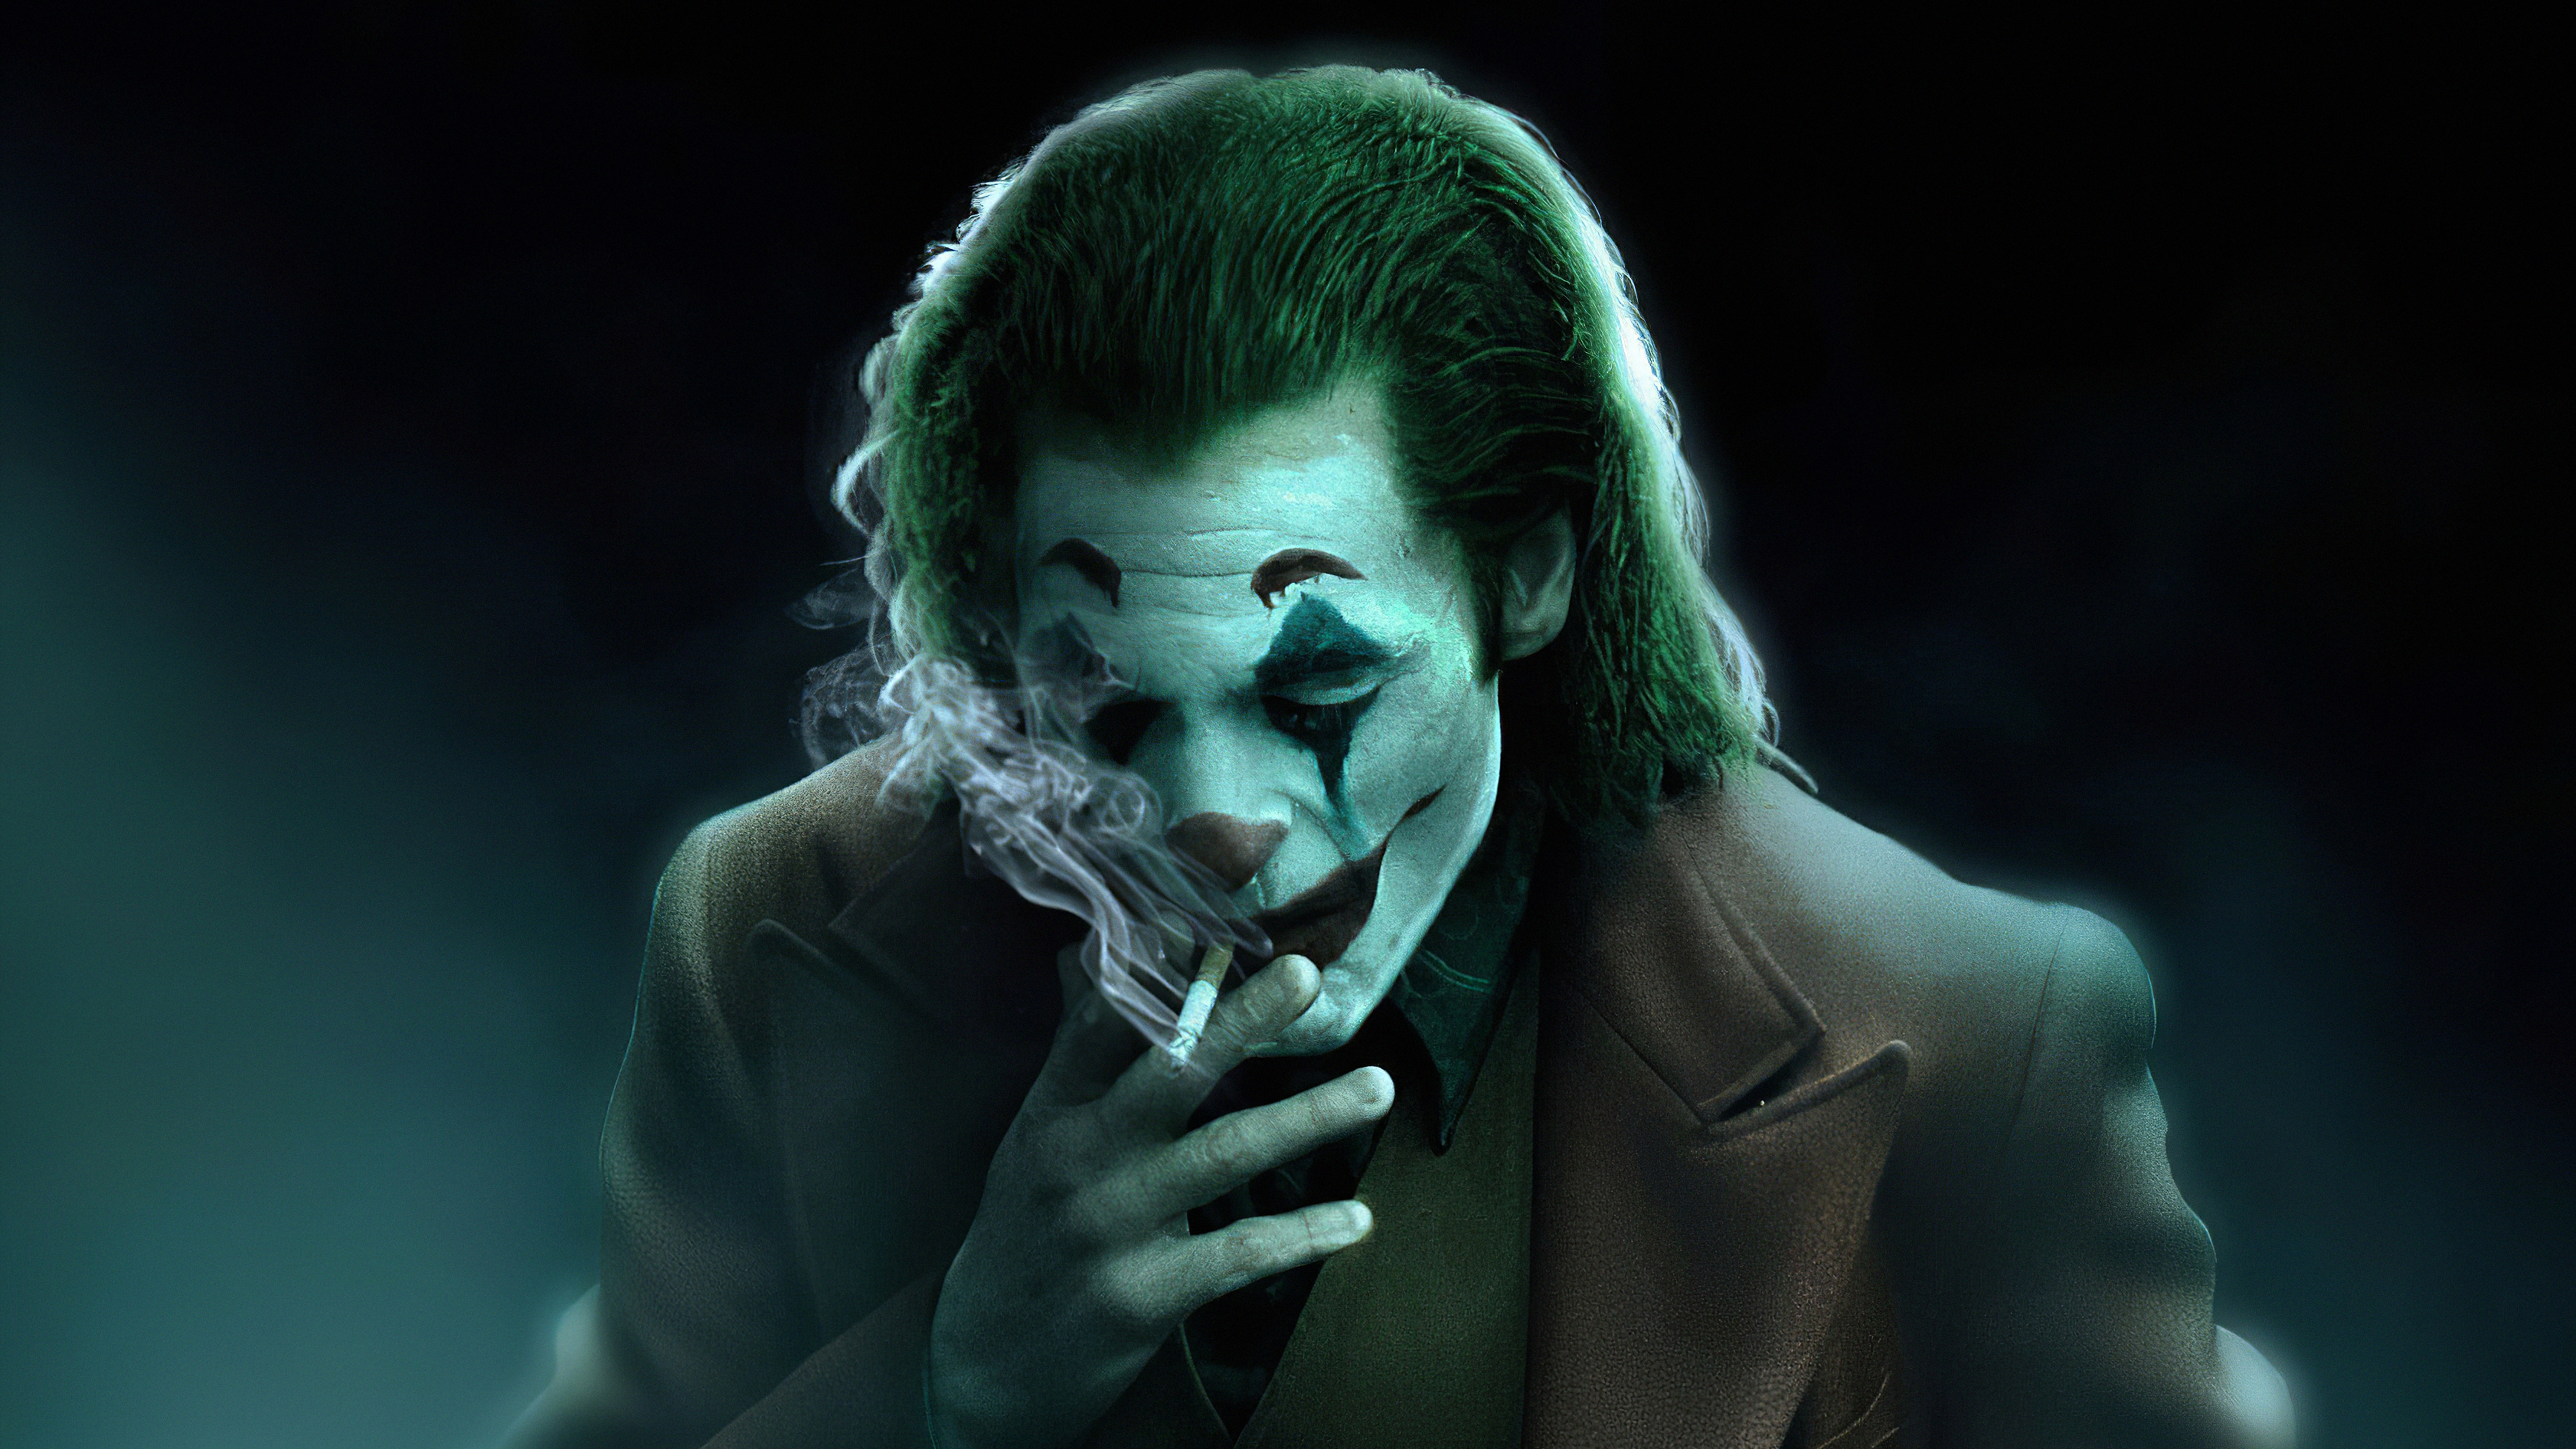  Joker  Smoker Art 4k  HD Superheroes 4k  Wallpapers  Images 